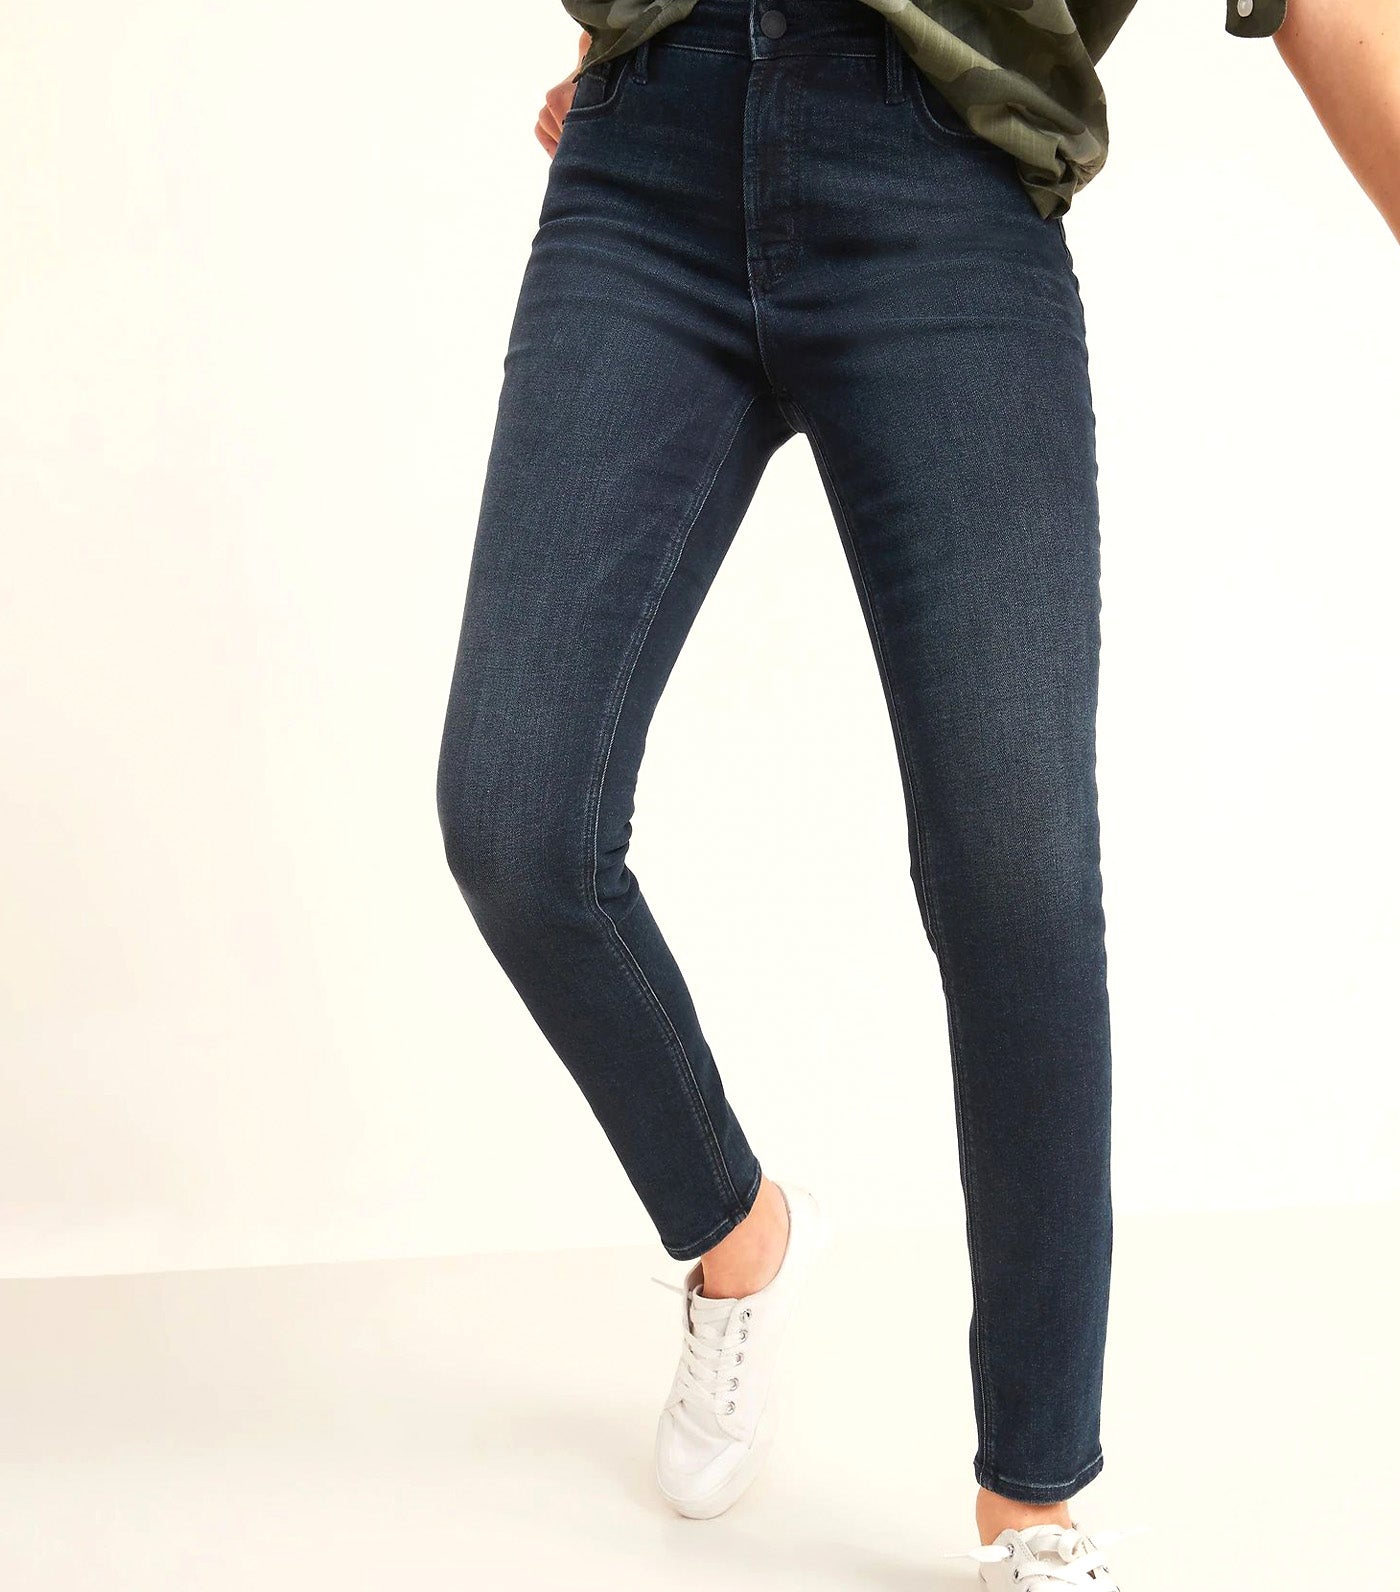 High-Waisted Rockstar Super Skinny Dark-Wash Jeans for Women Bermuda